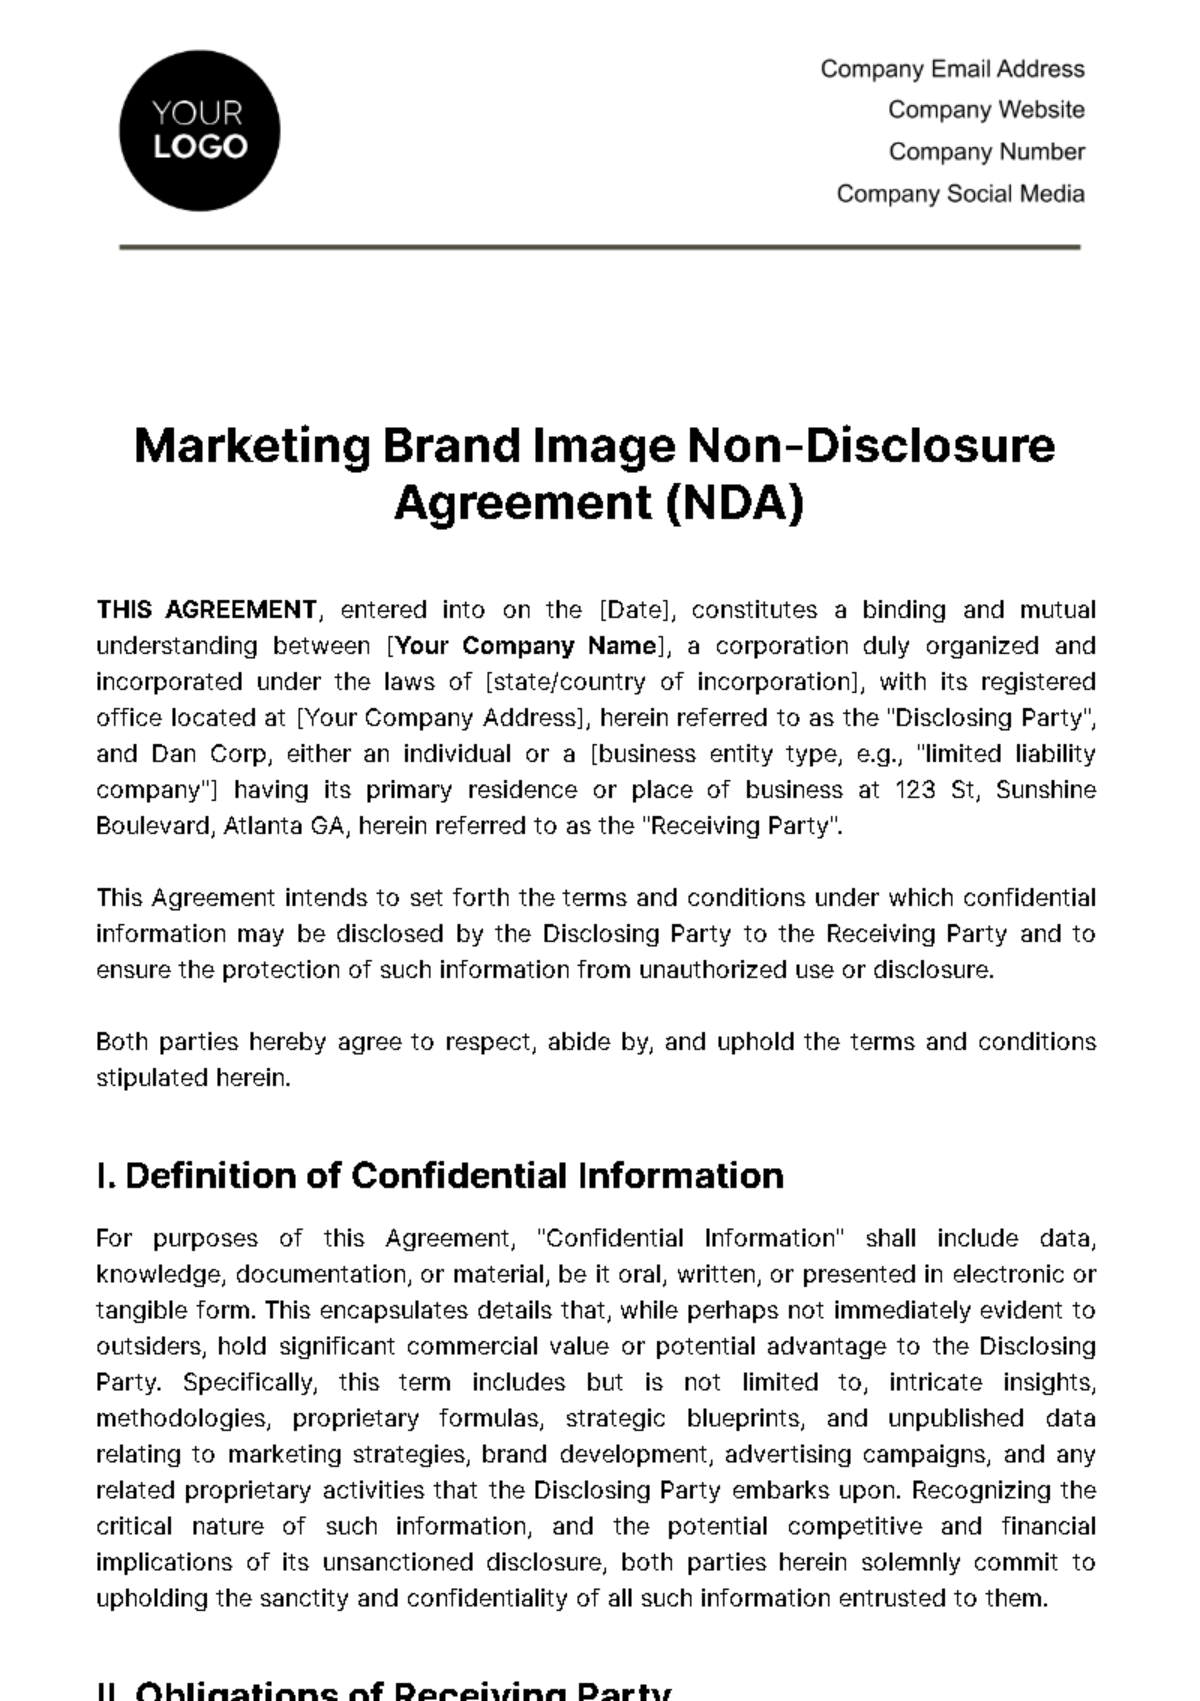 Marketing Brand Image NDA Template